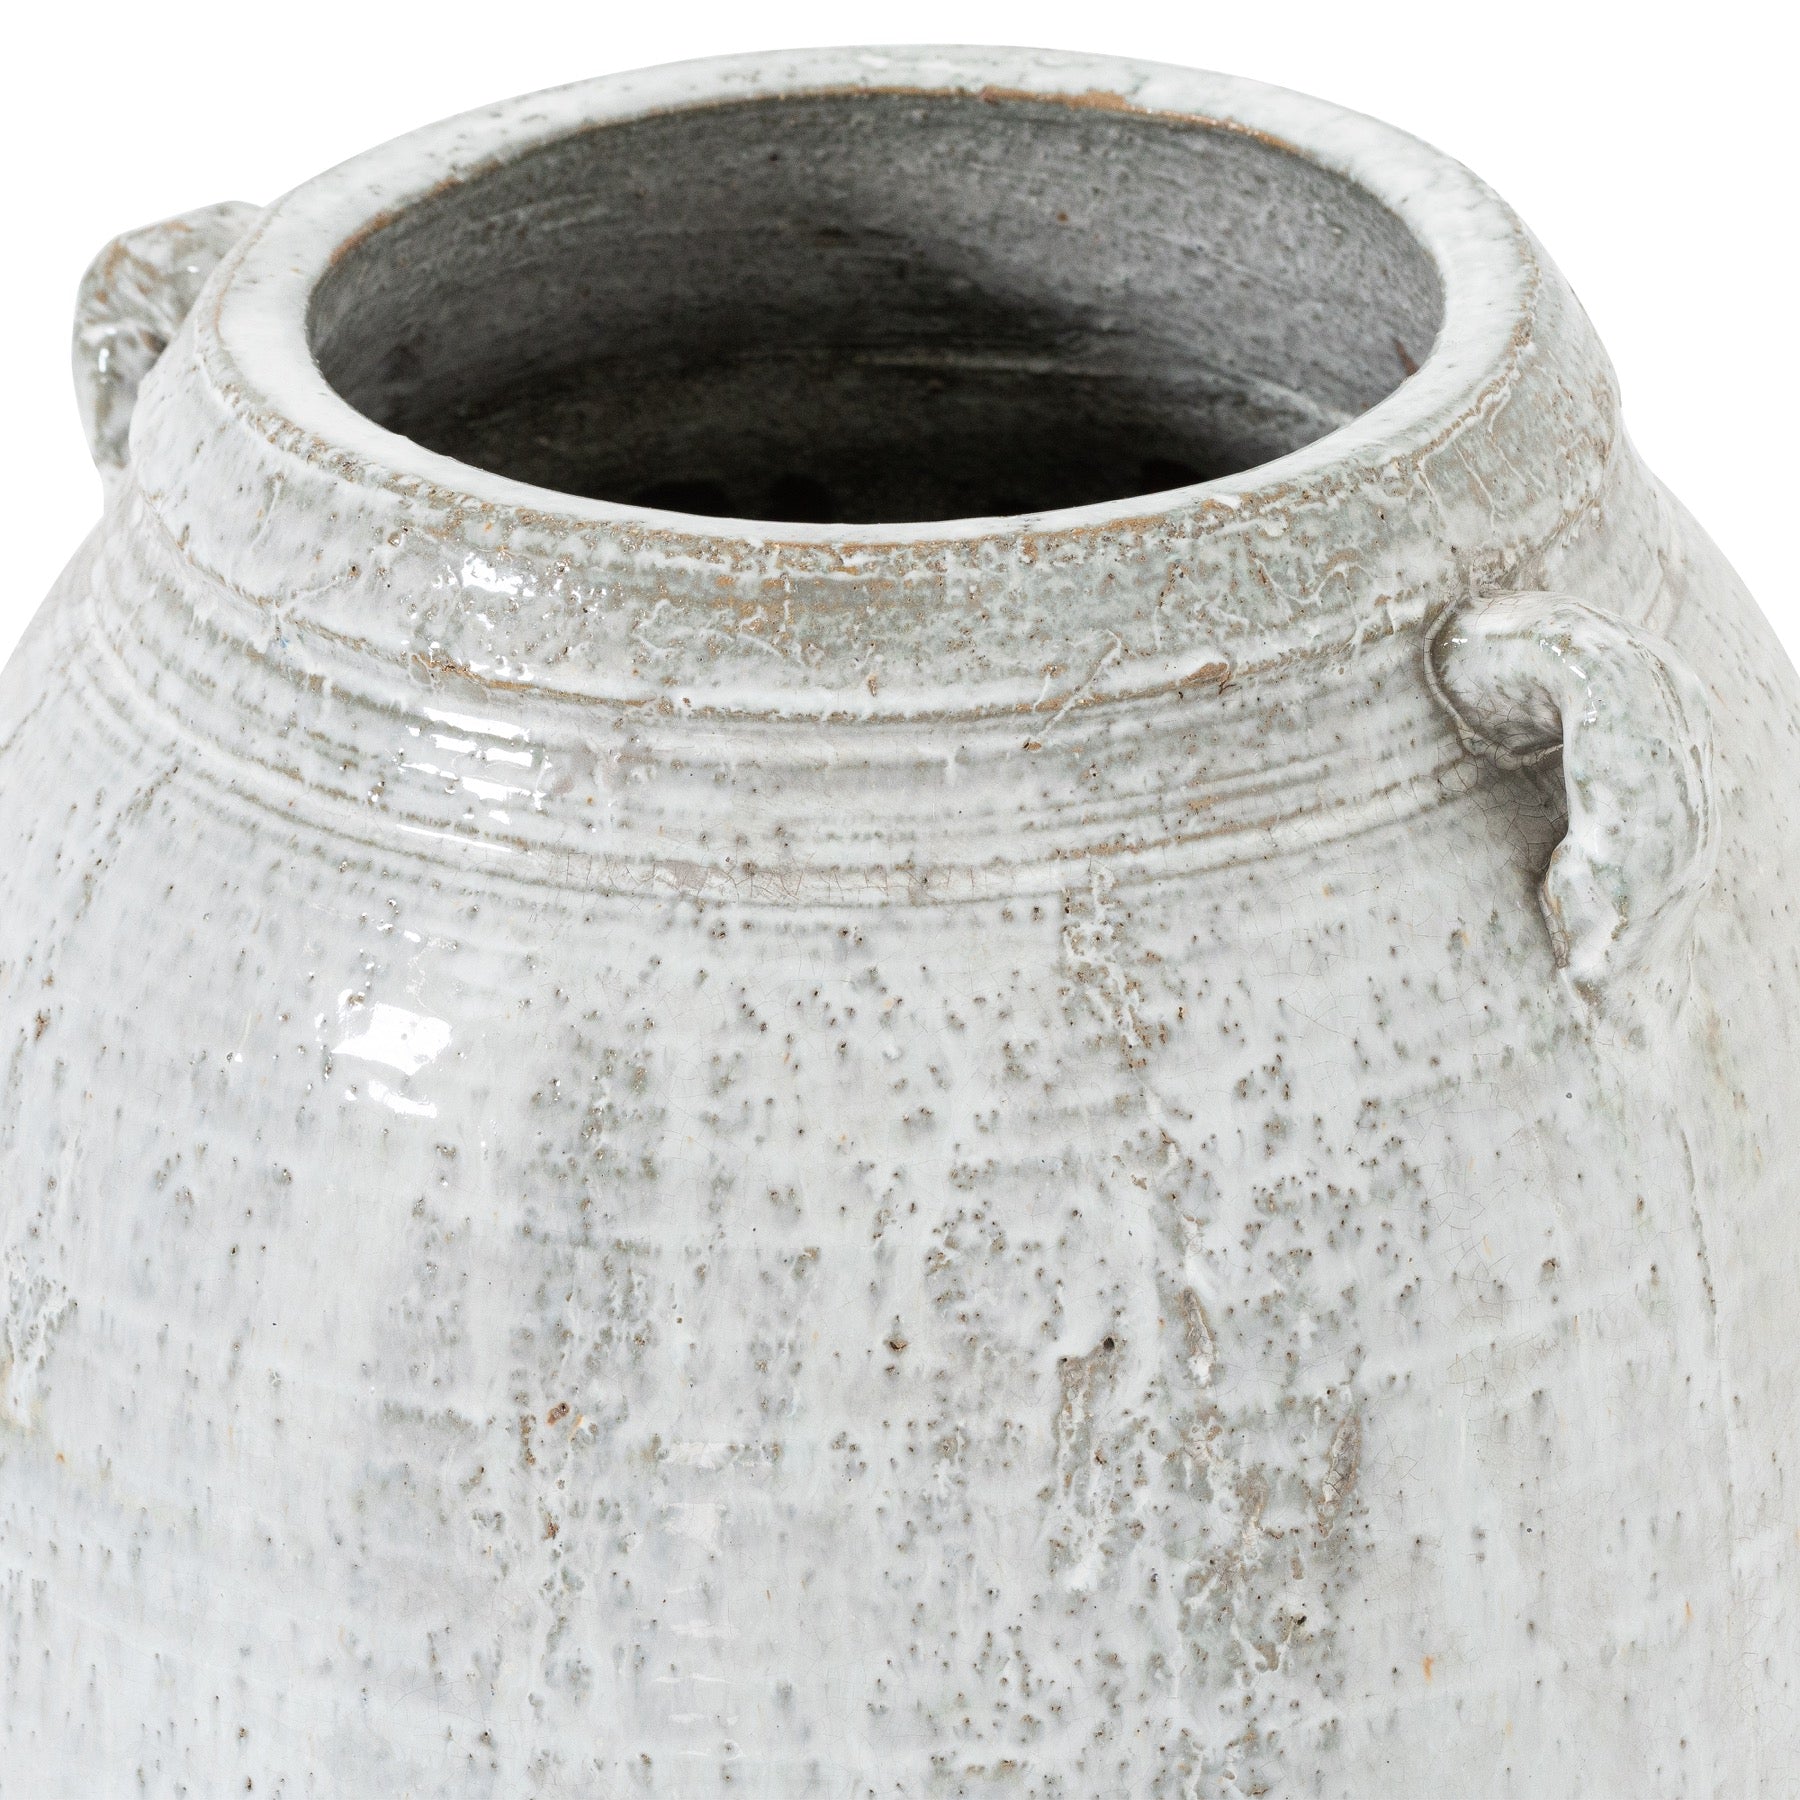 Large Ceramic Dipped Amphora Vase